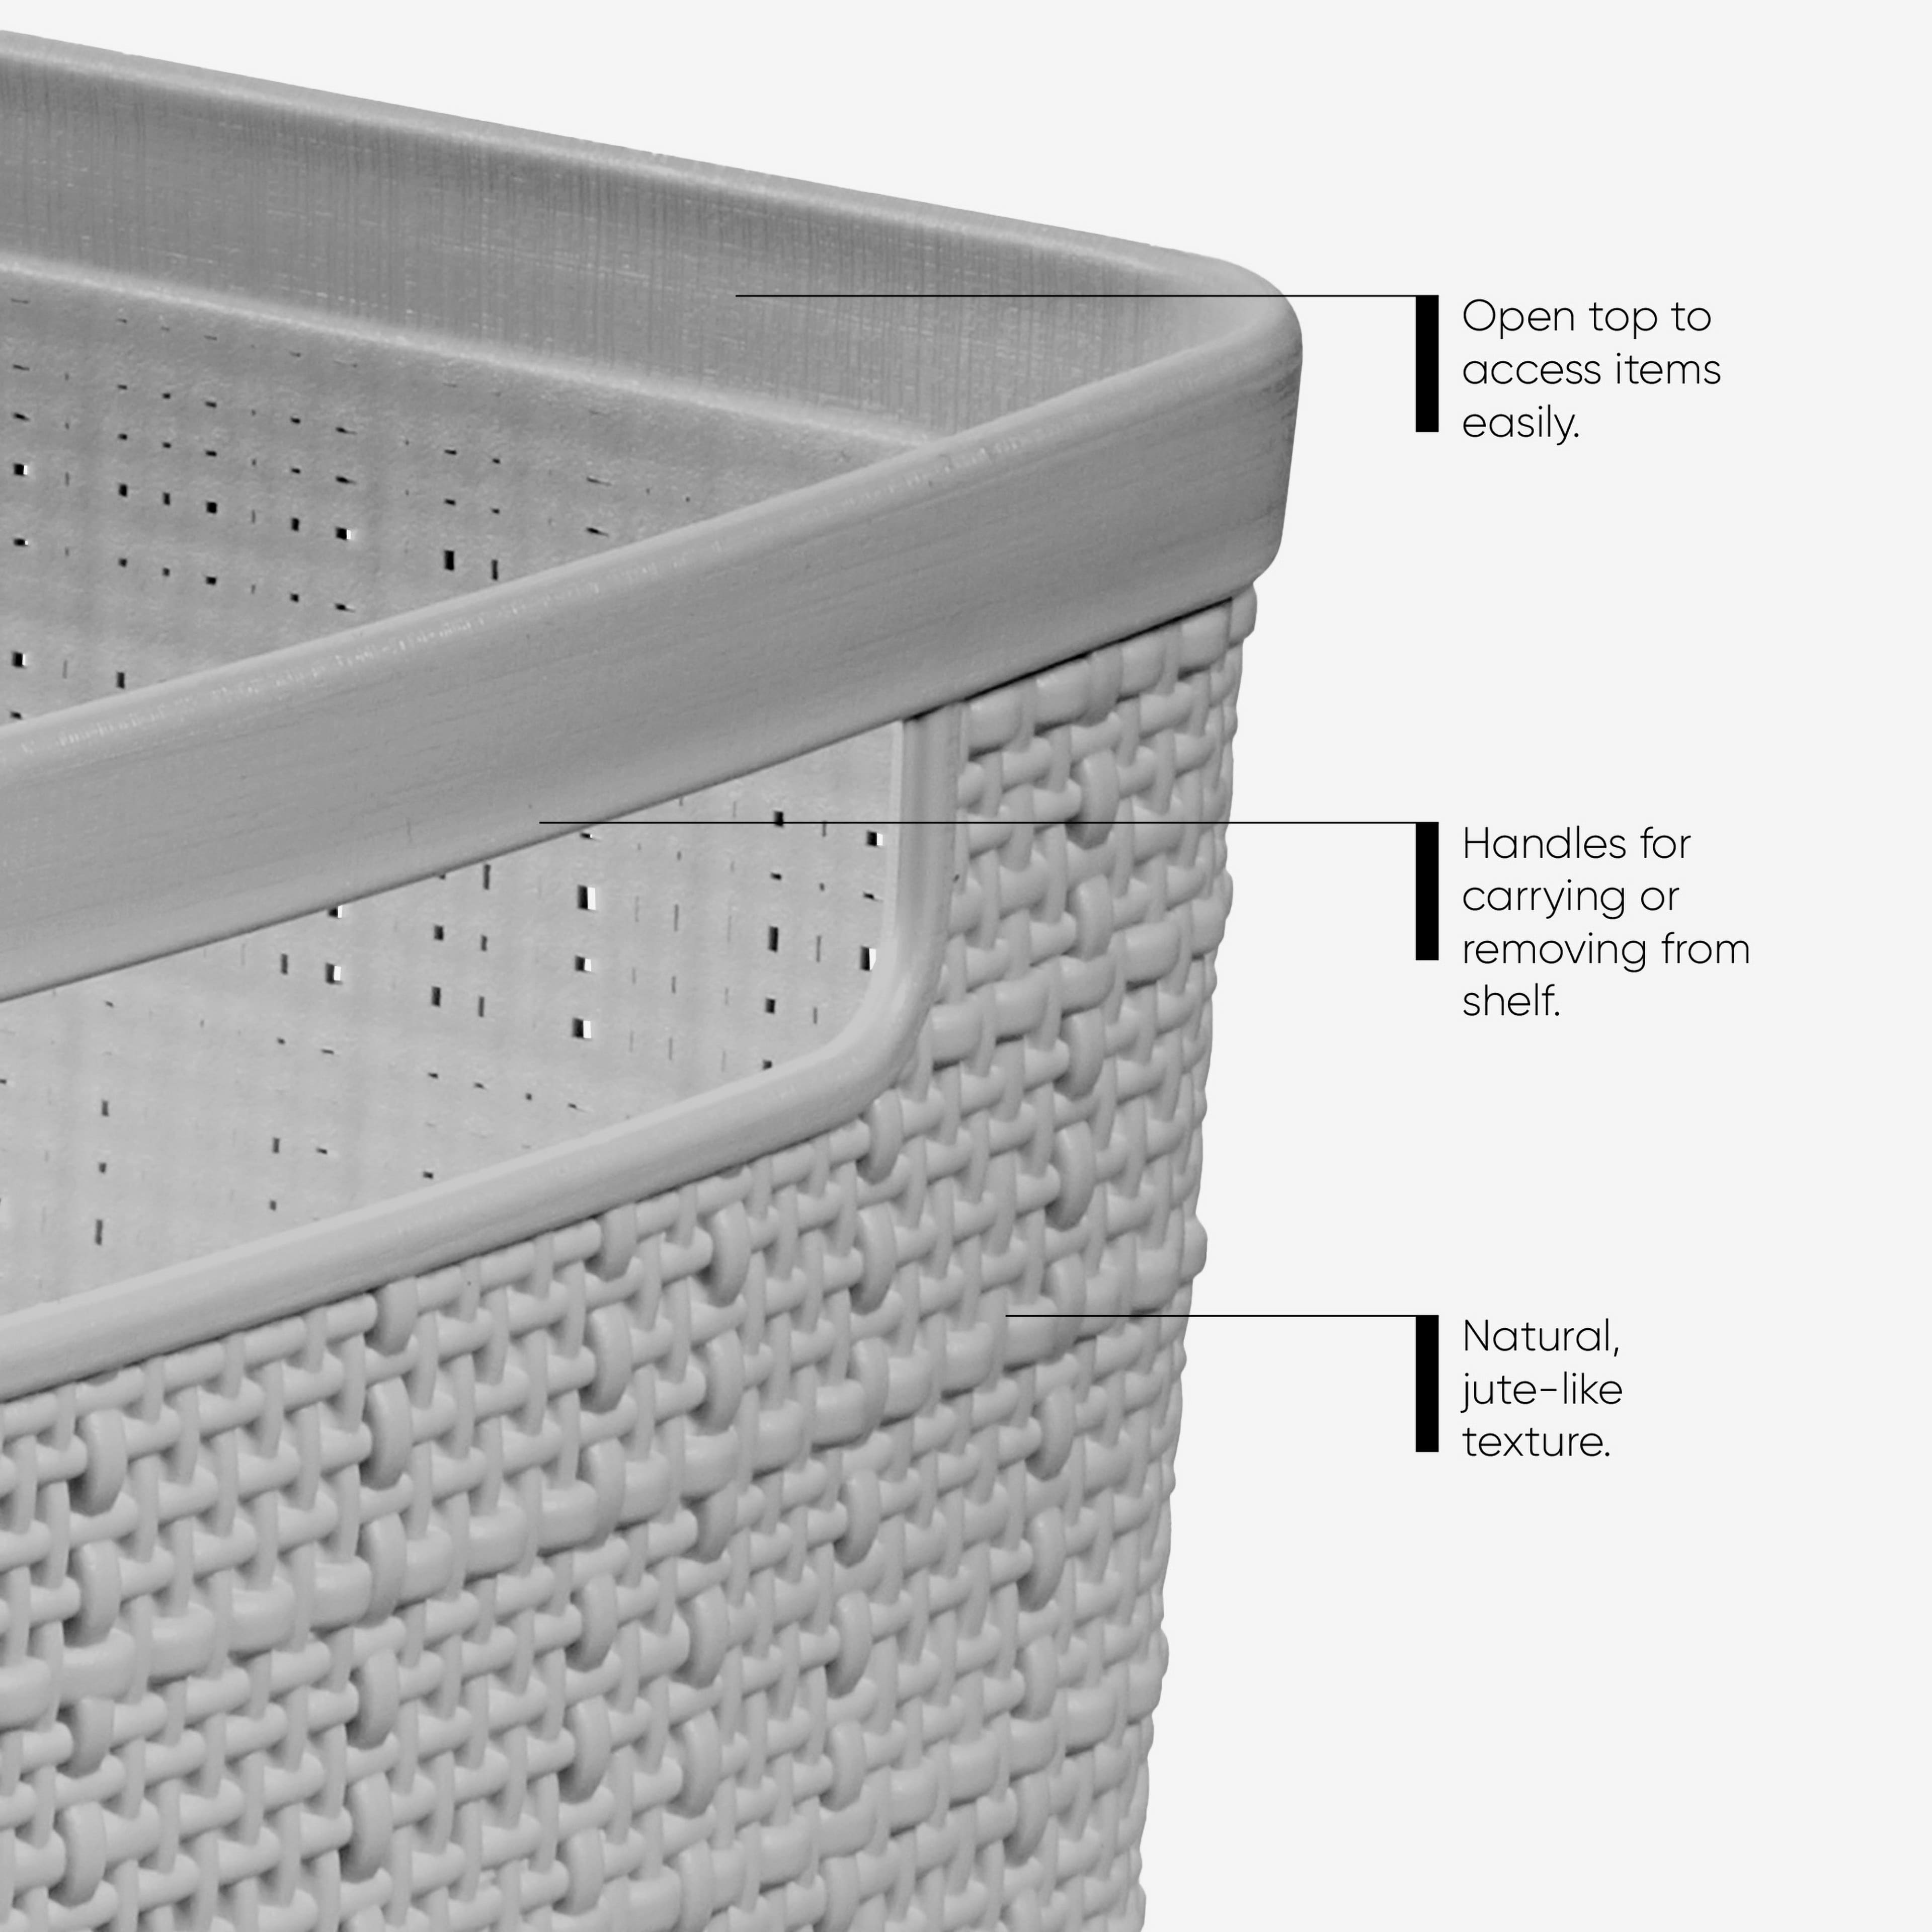 Storage Box Basket Lidded Handle Decorative Curver S M L Size 4